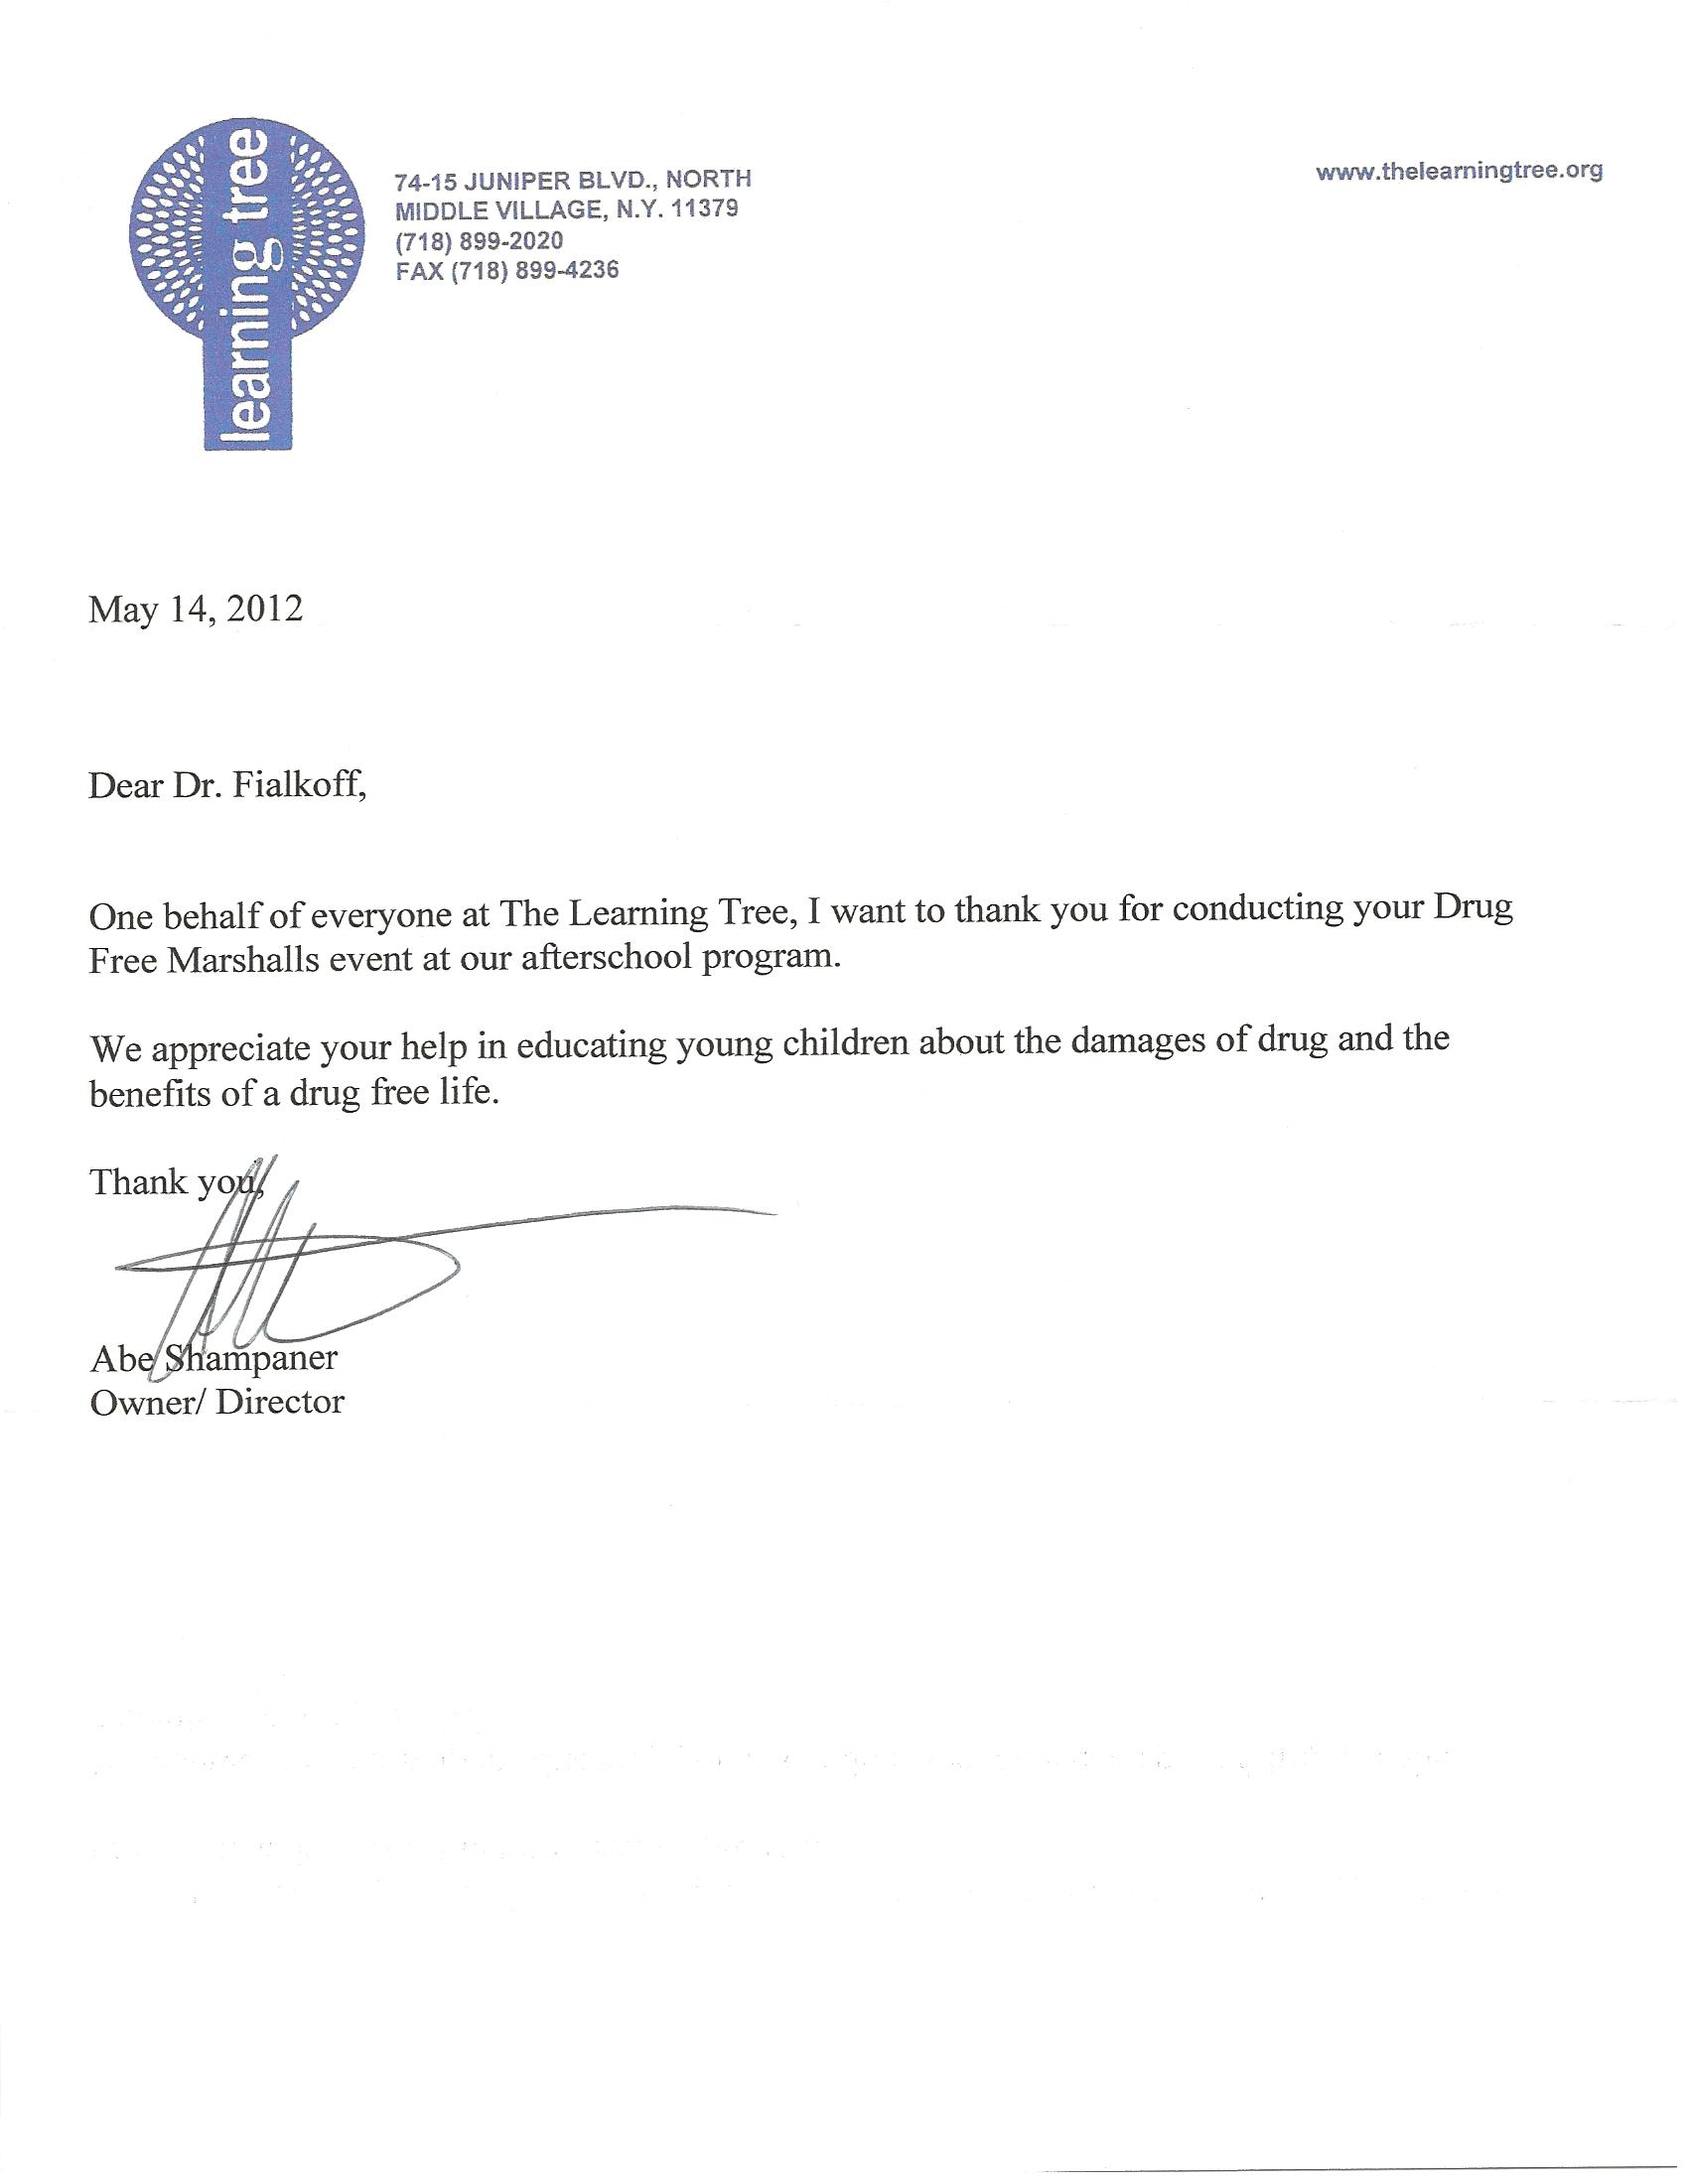 Thank You Letter 2 Dr Bernard Fialkoff